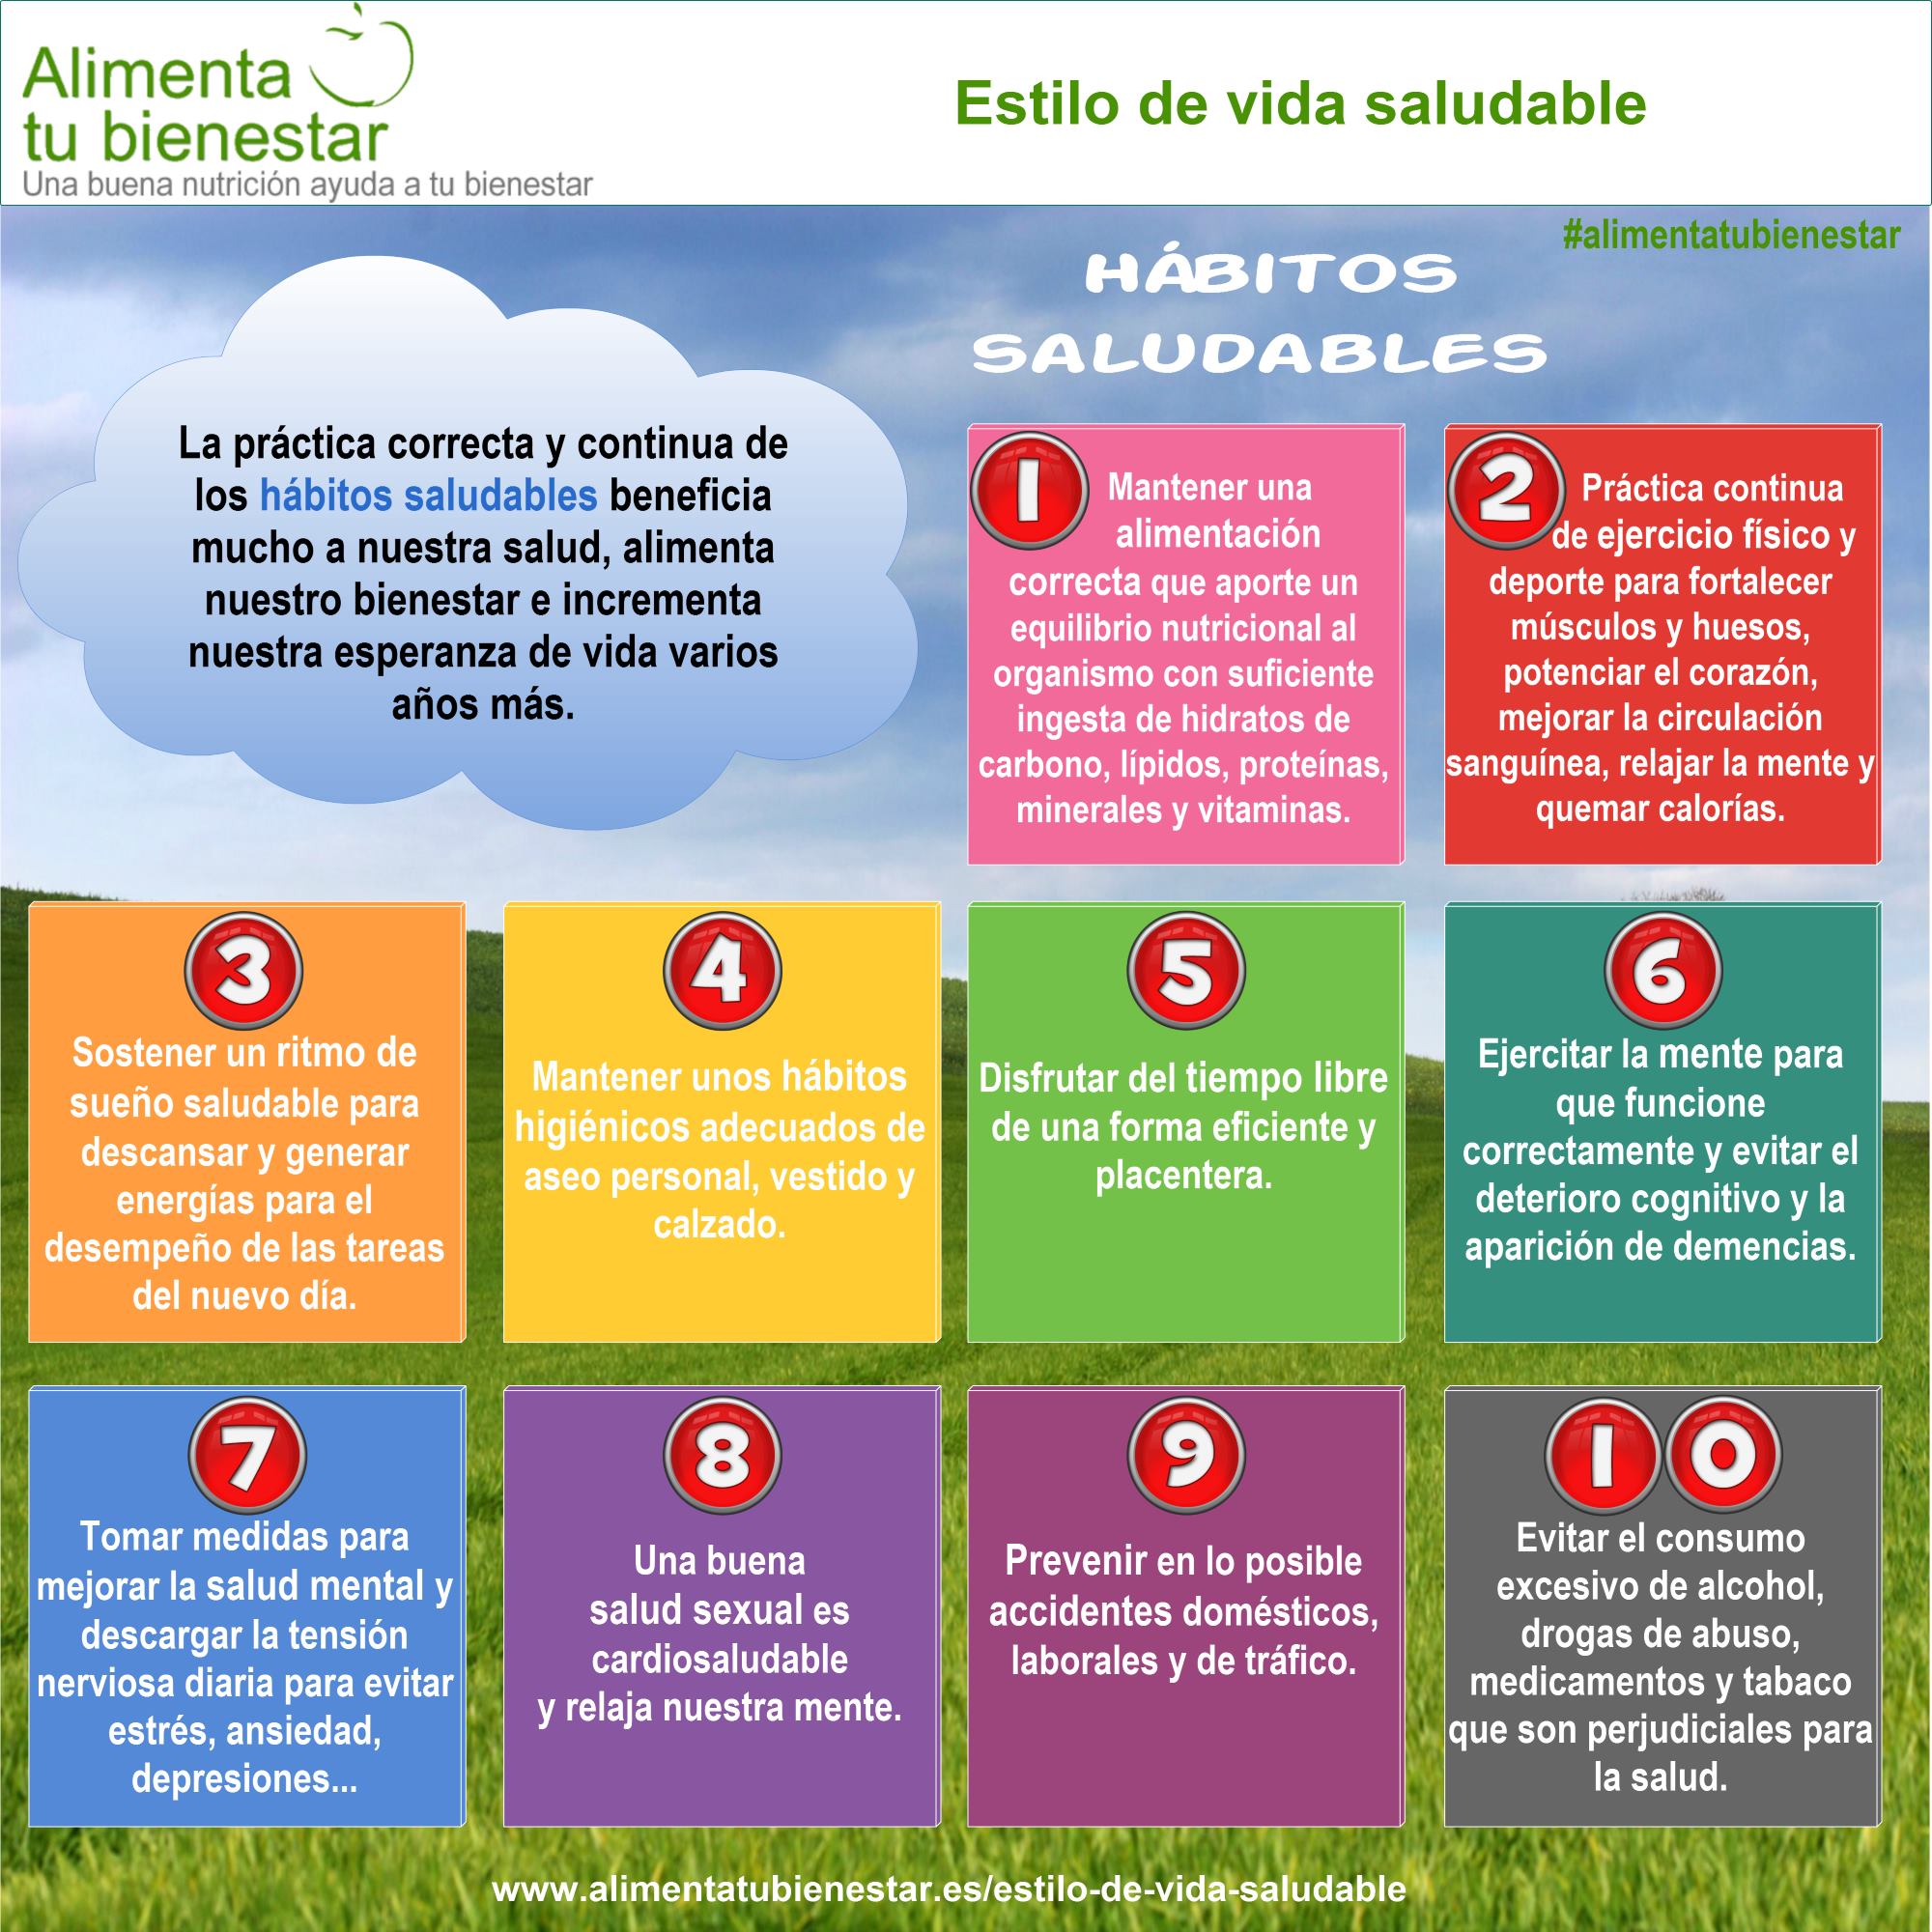 http://alimentatubienestar.es/wp-content/uploads/2013/08/Estilo-de-vida-saludable-infografia.jpg